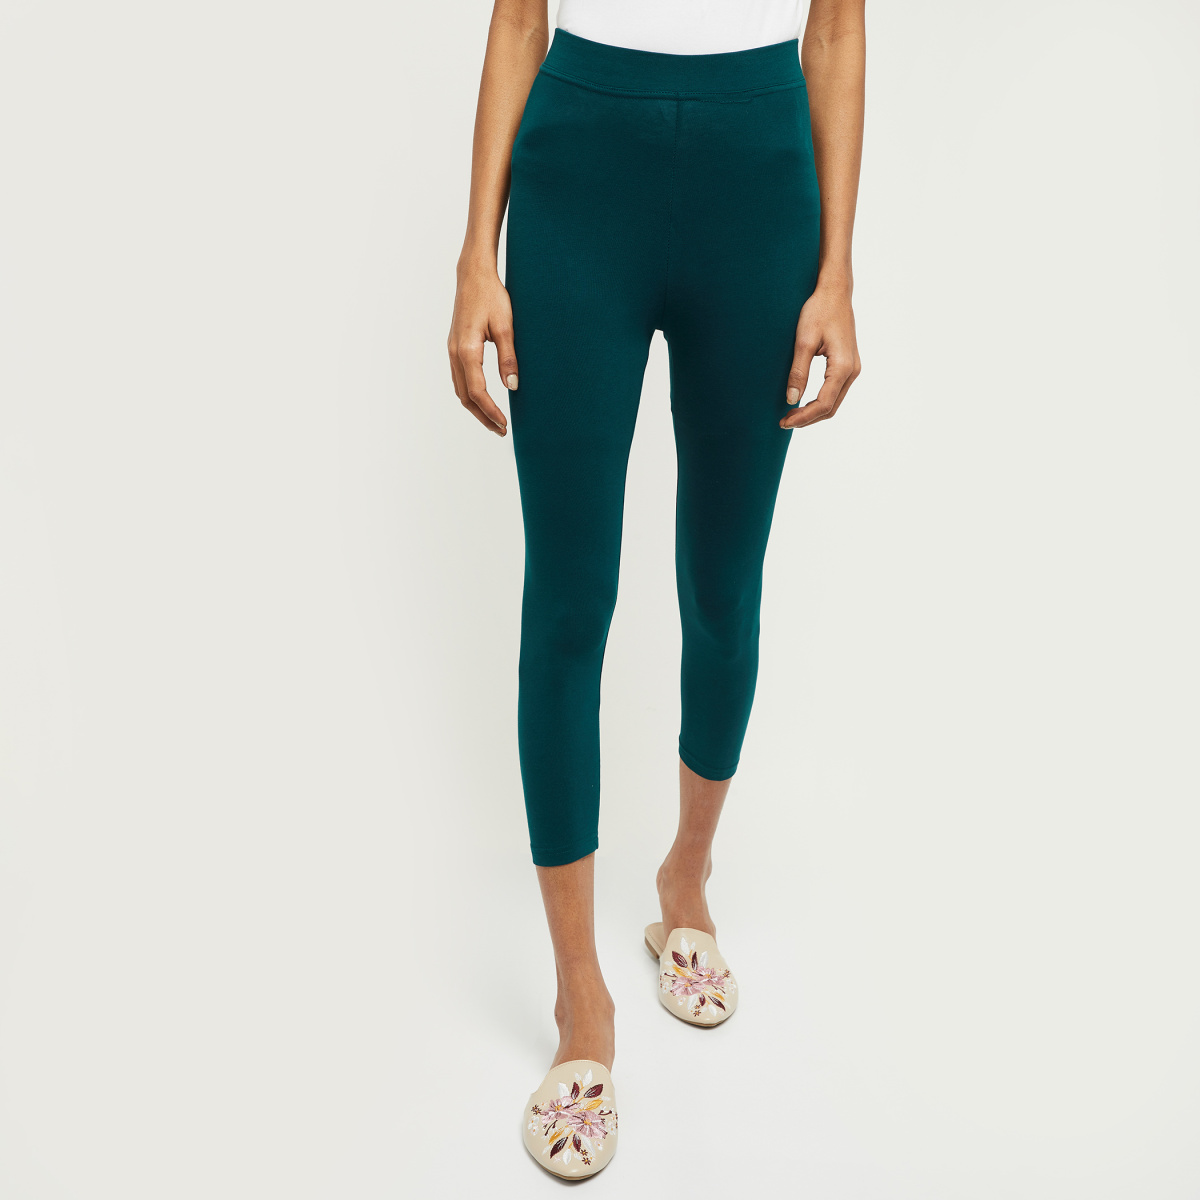 Buy Kotii Women's Plus Size Lace Trim Capri Leggings Cropped Leggings  Stretch Tights Pants Black at Amazon.in